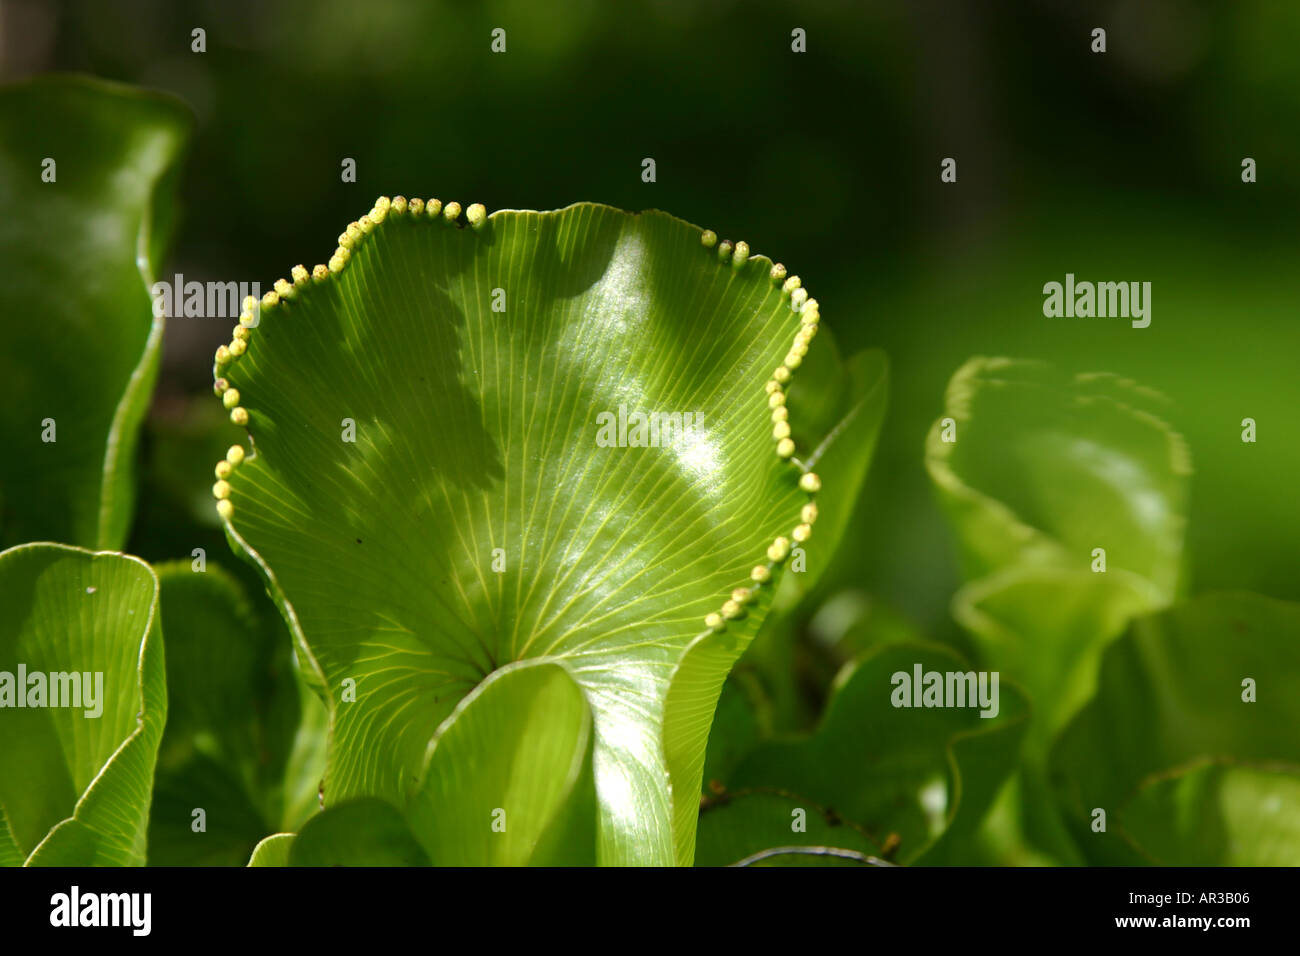 Kidney fern with crowded sori on leaf margins New Zealand Stock Photo